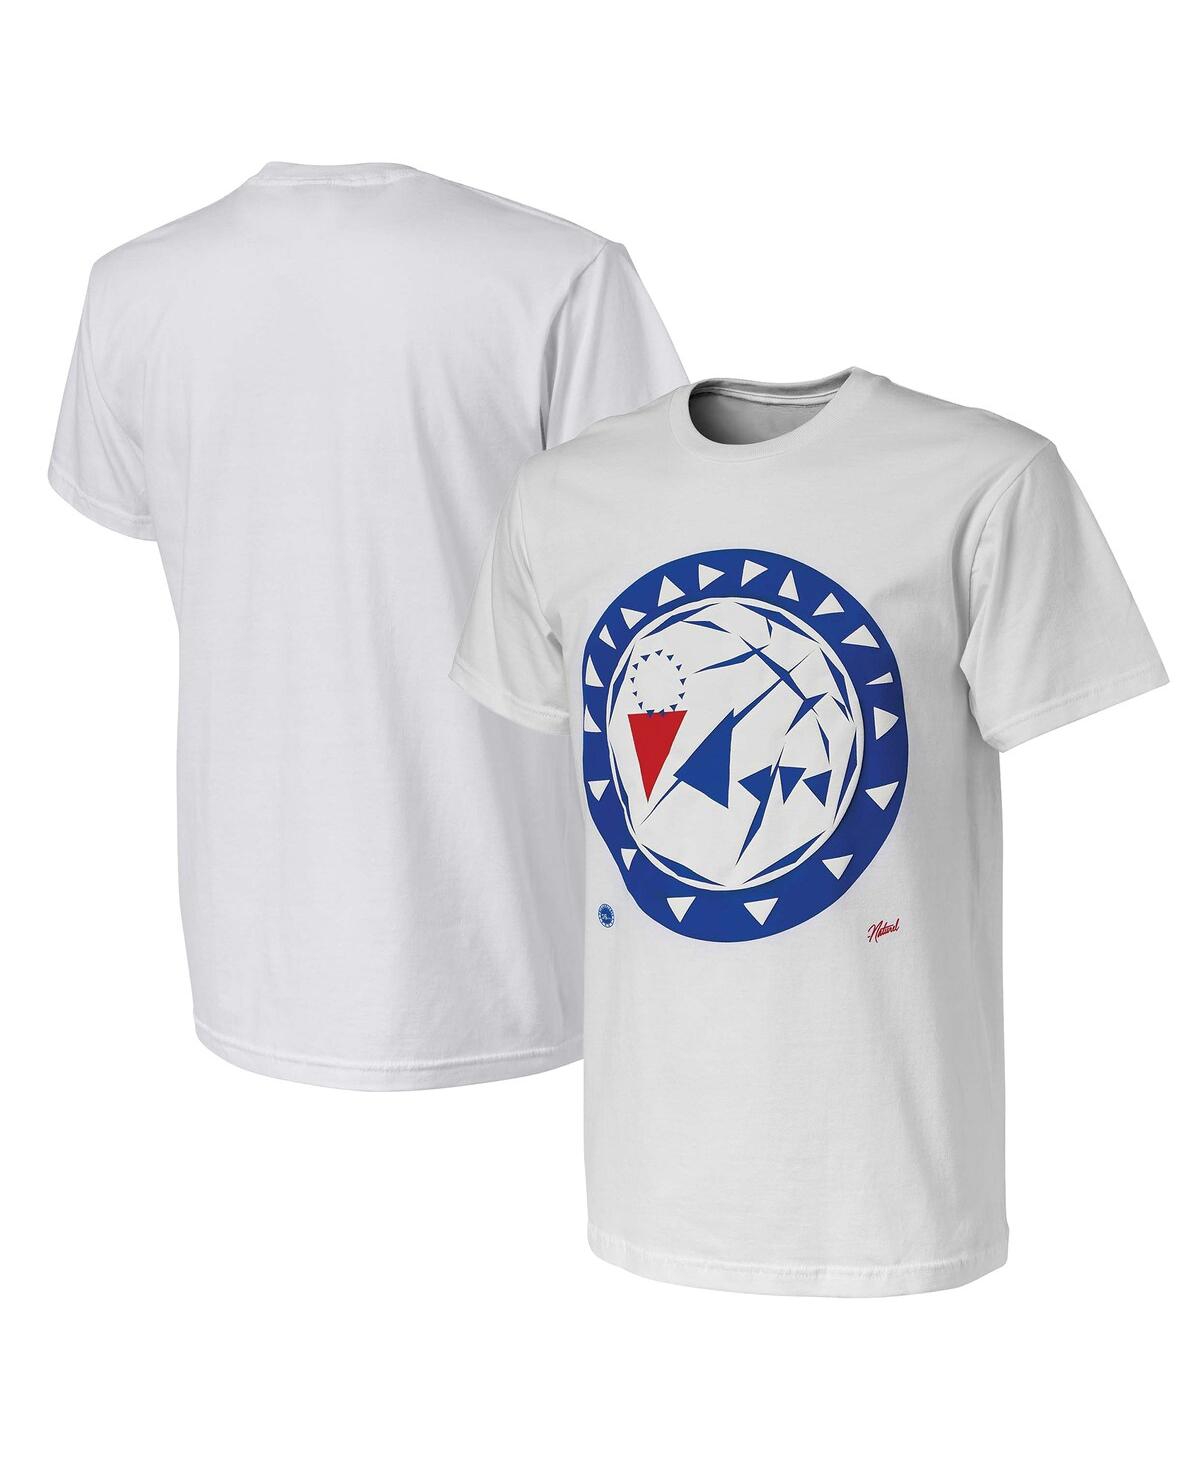 Men's Nba x Naturel White Philadelphia 76ers No Caller Id T-shirt - White